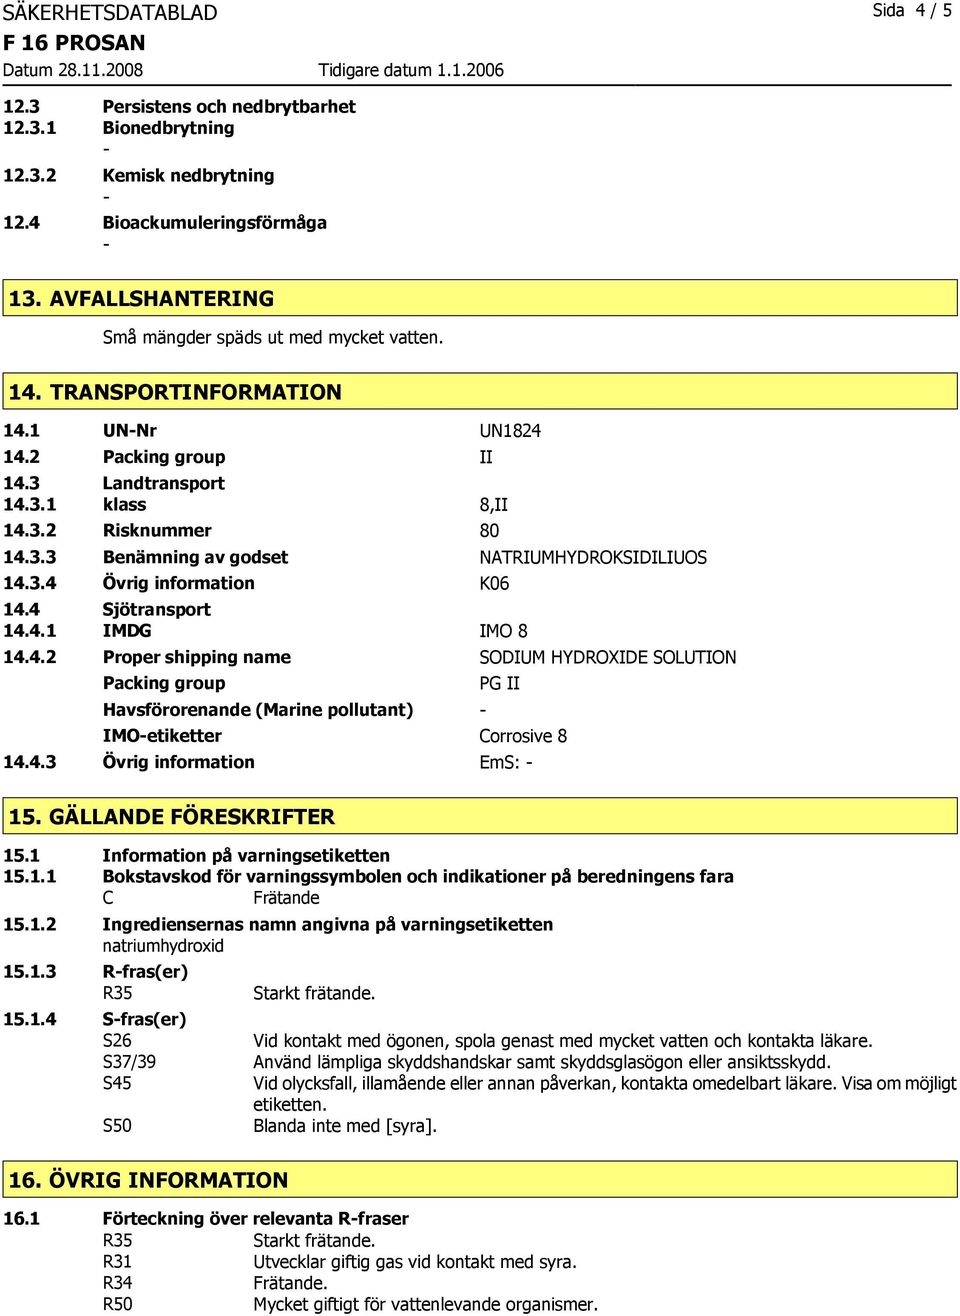 4 Sjötransport 14.4.1 IMDG IMO 8 14.4.2 Proper shipping name SODIUM HYDROXIDE SOLUTION Packing group Havsförorenande (Marine pollutant) PG II IMOetiketter Corrosive 8 14.4.3 Övrig information EmS: 15.